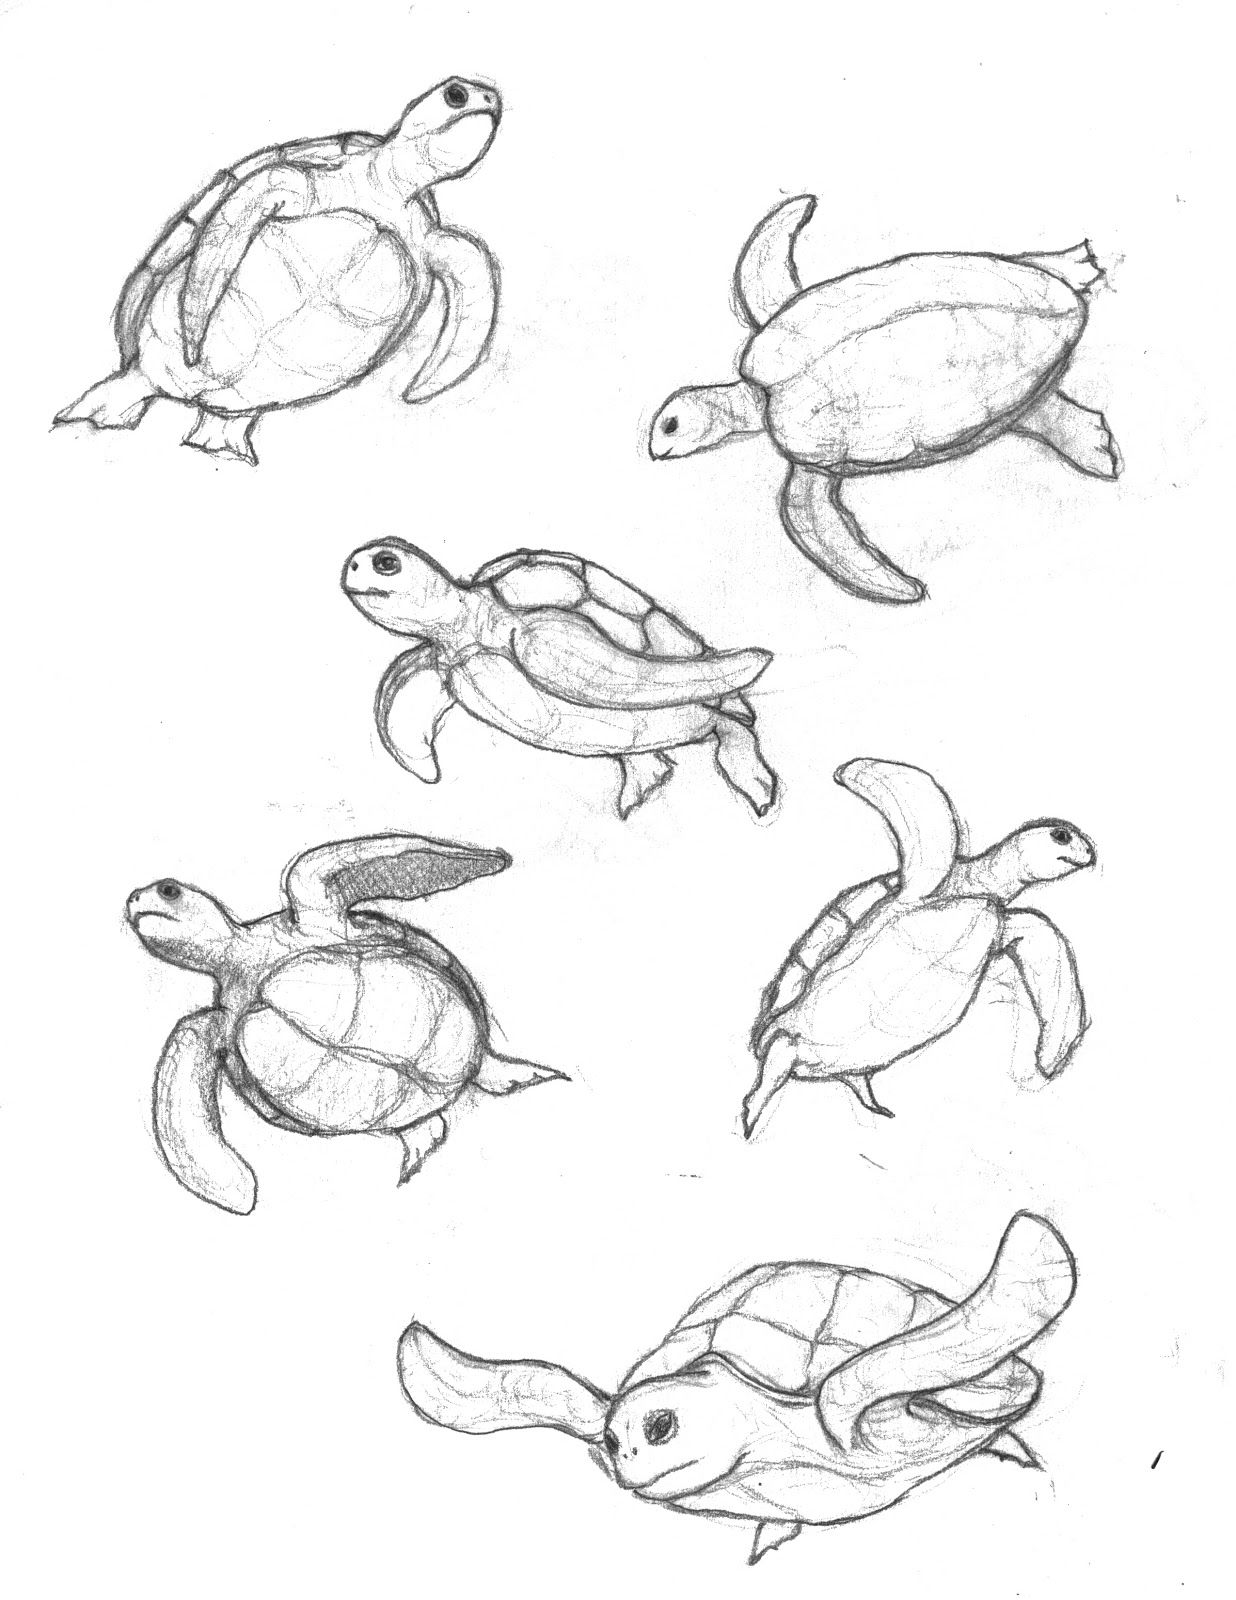  Шаг за шагом рисуем милую плавающую черепаху